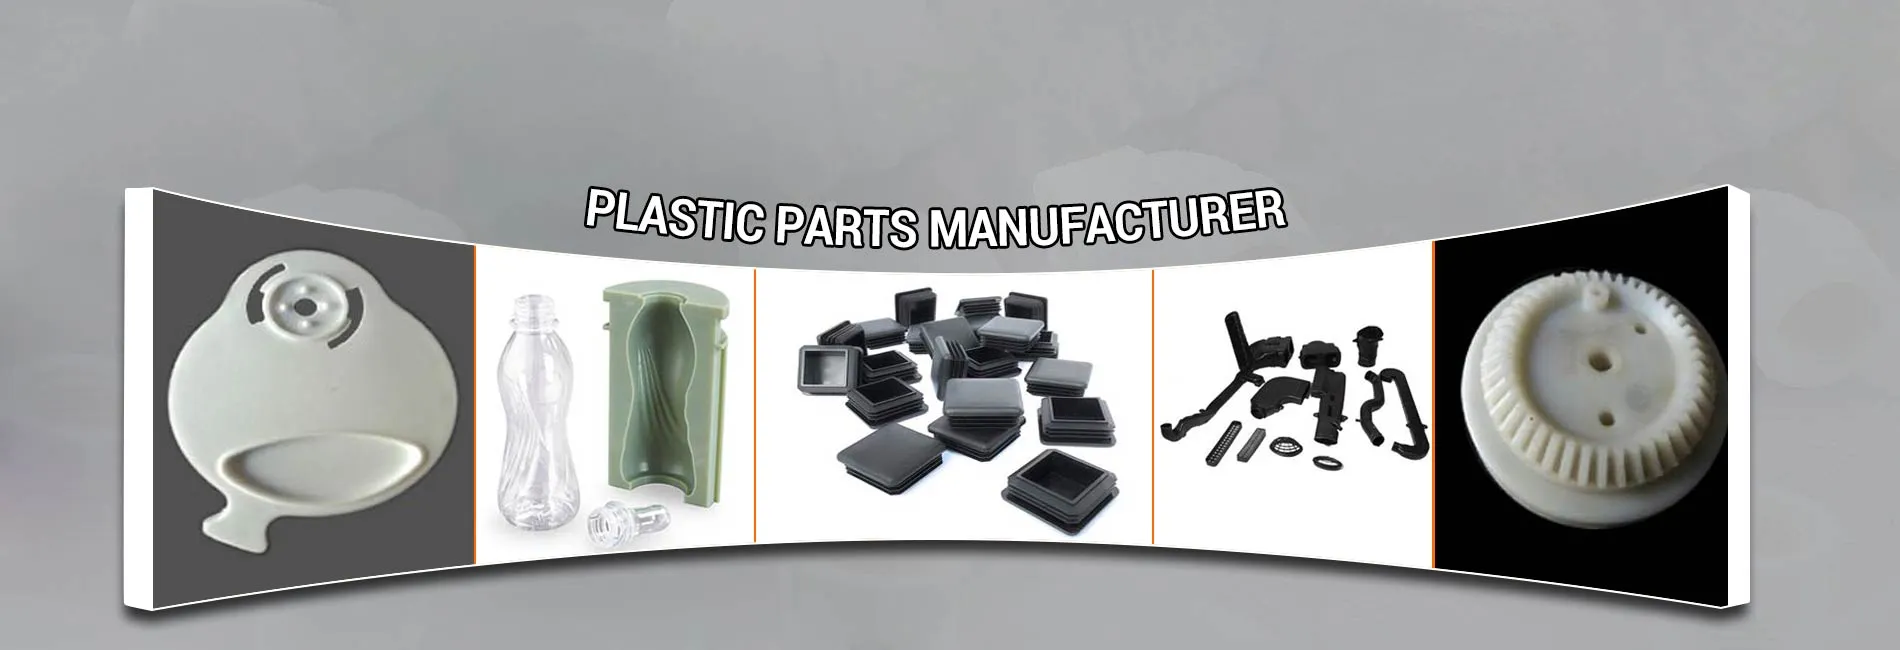 Industrial Plastic Components Manufacturer